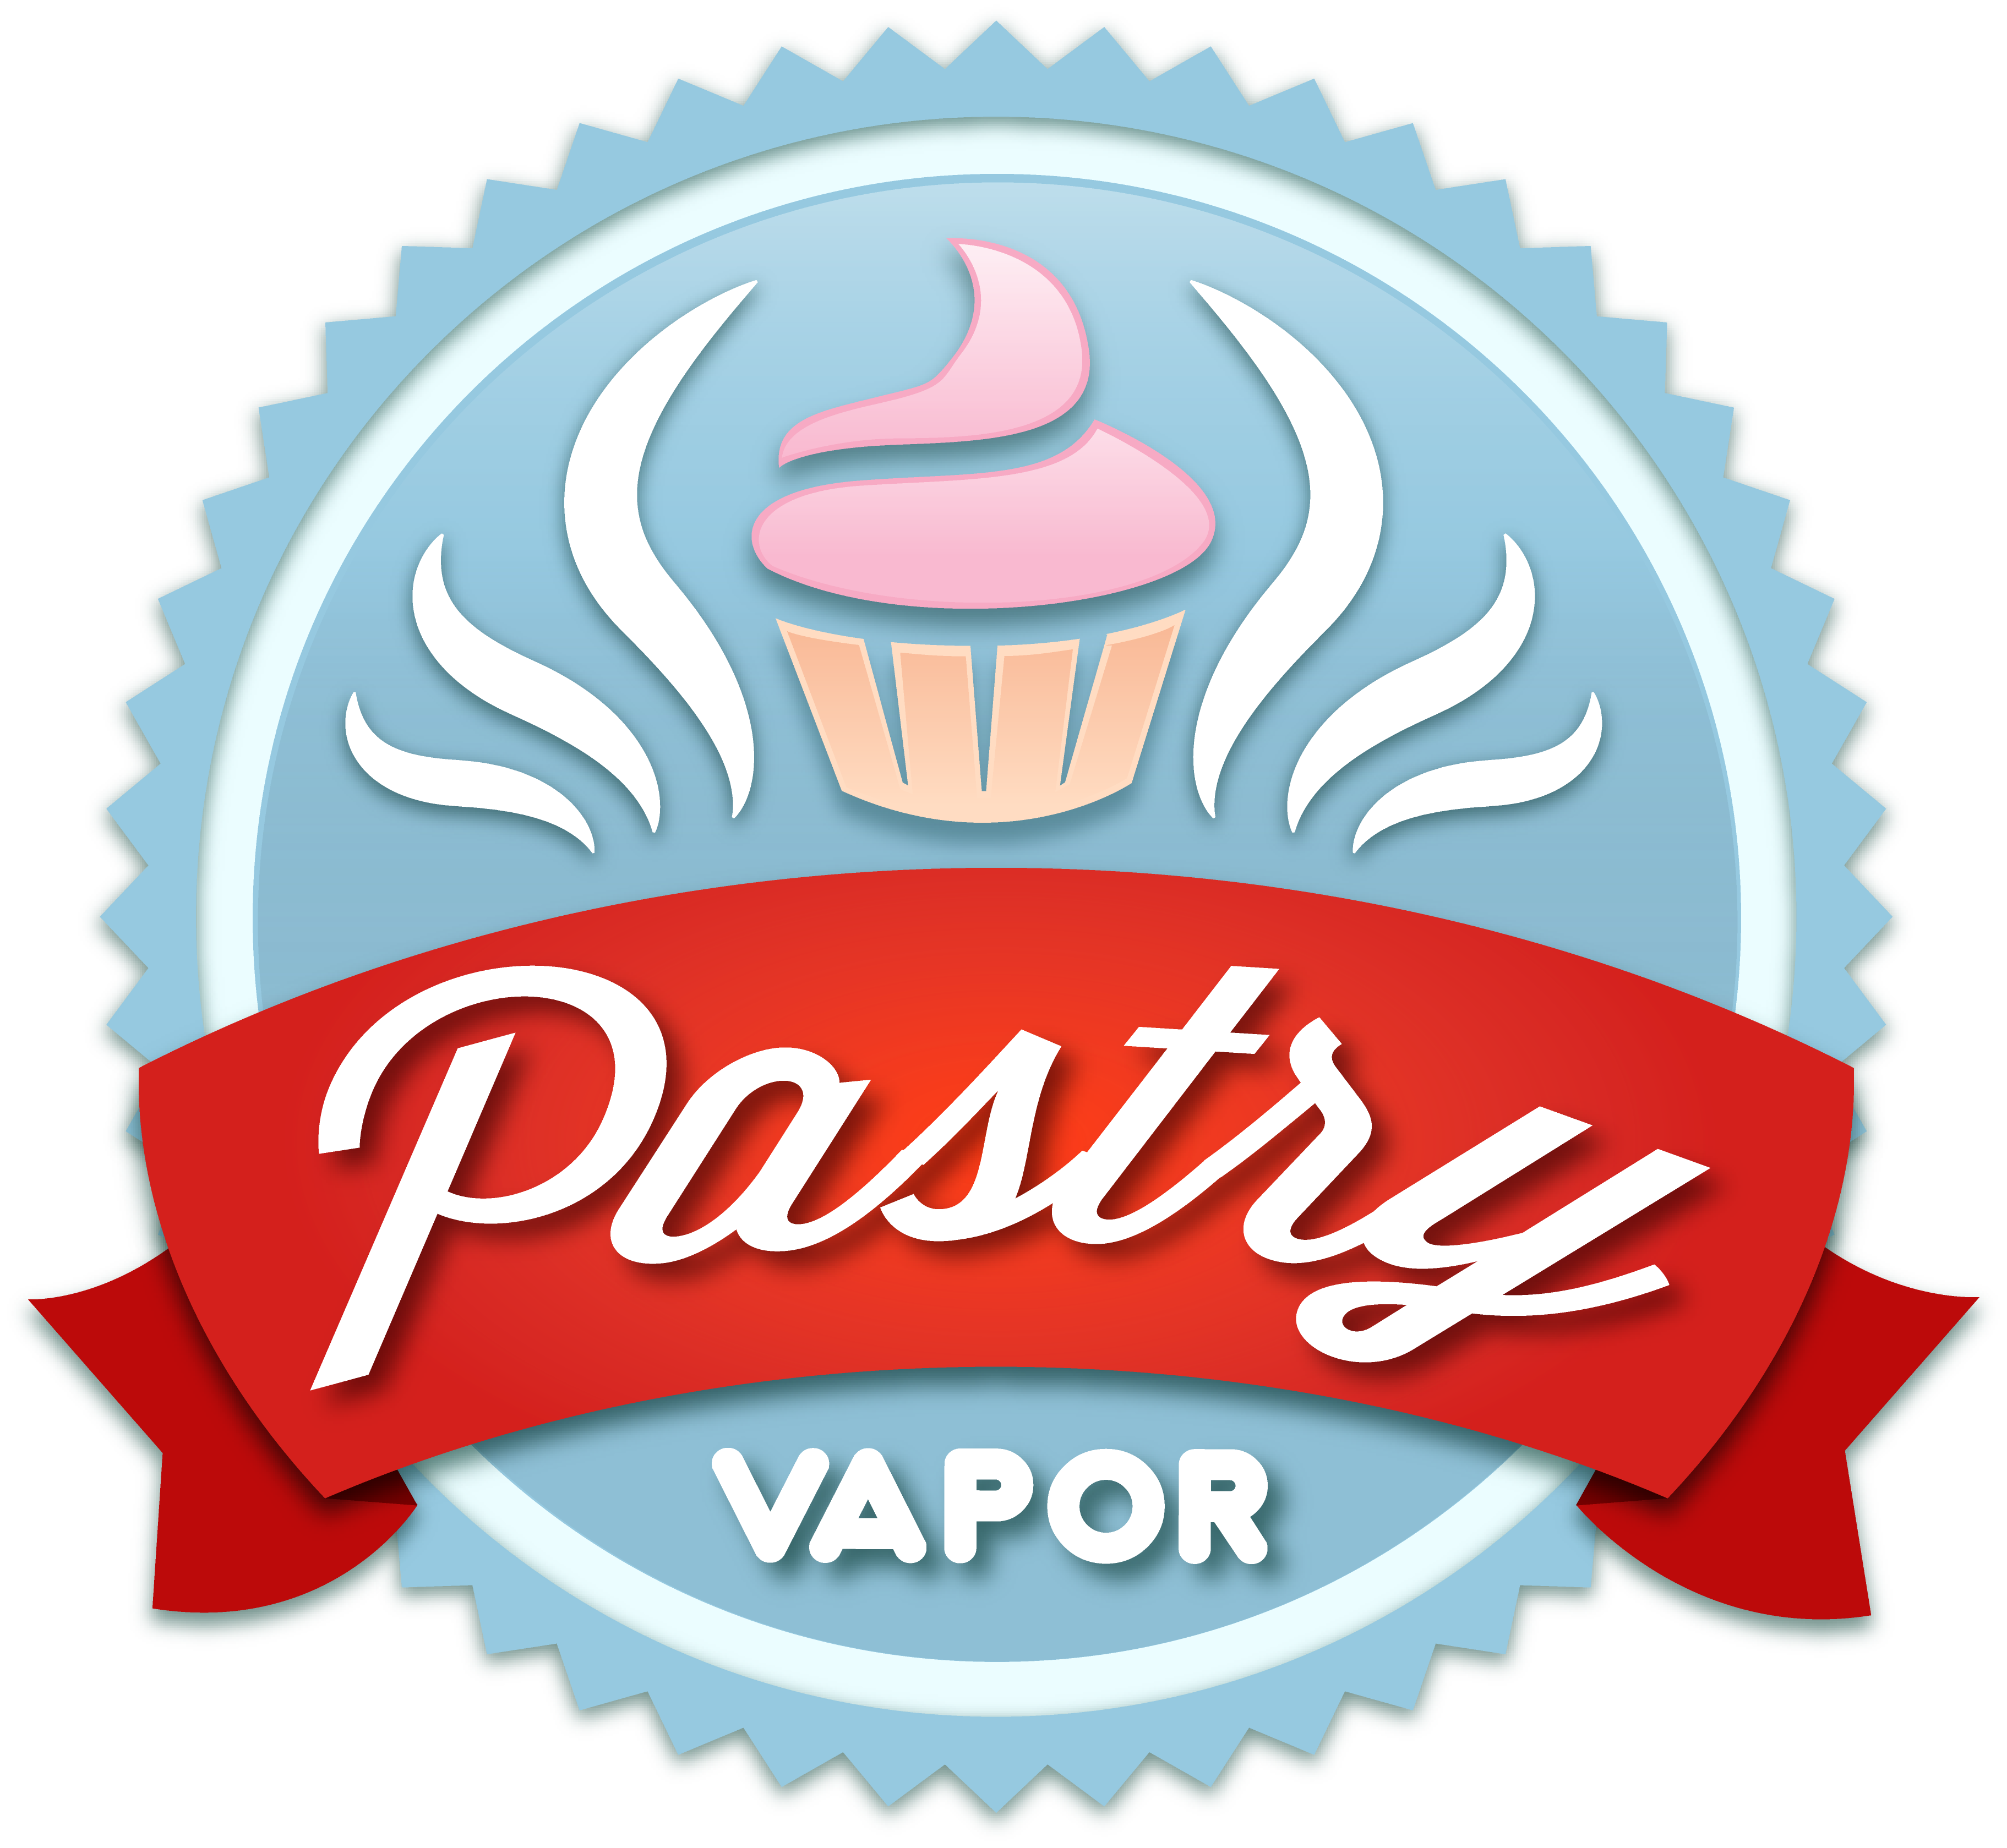 Pastry Vapor